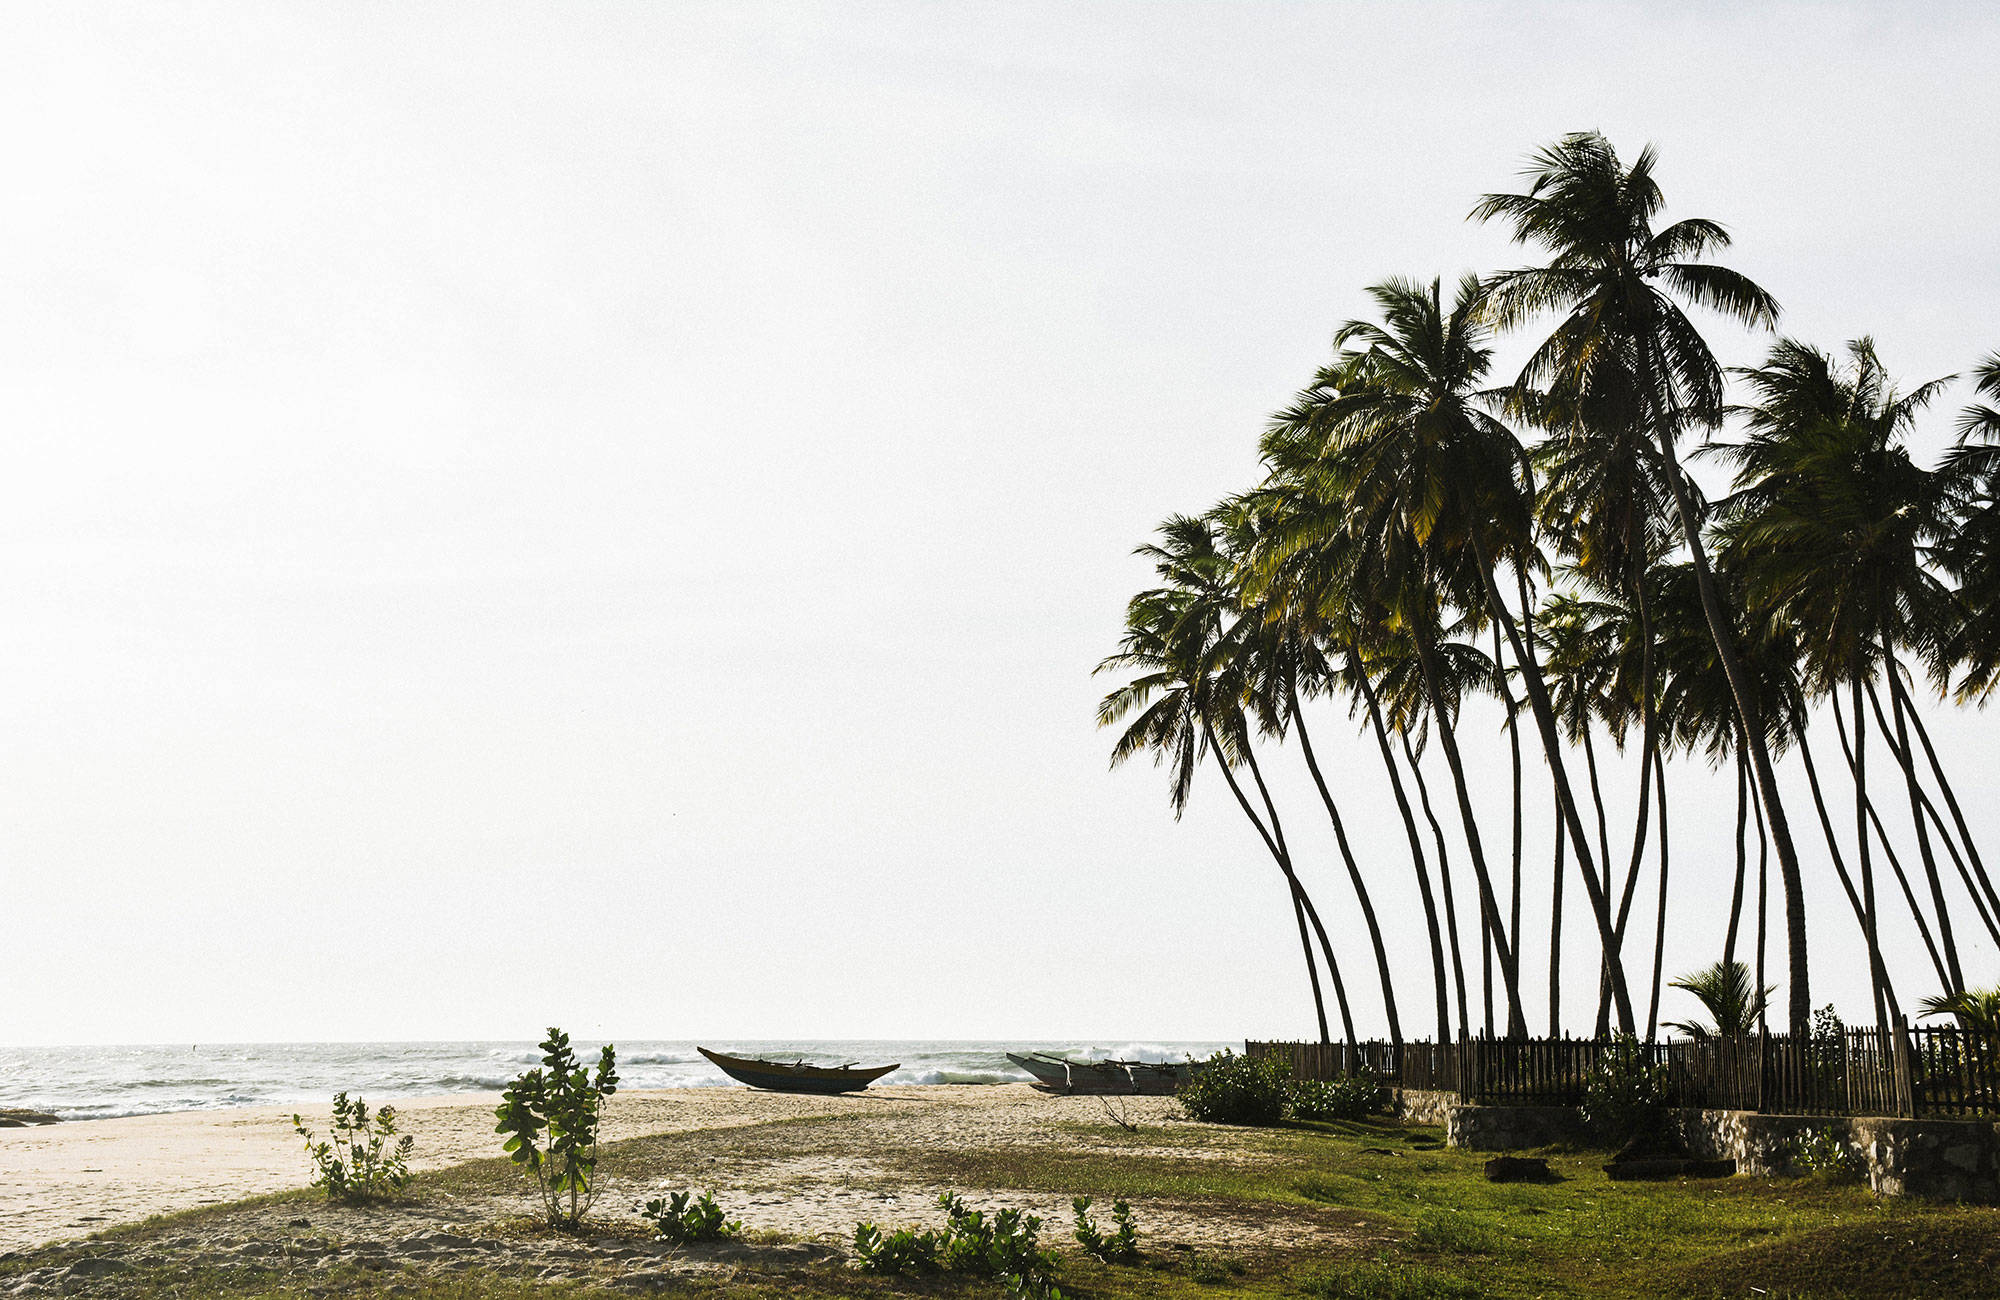 Nyd de skønne strande i Sri Lanka